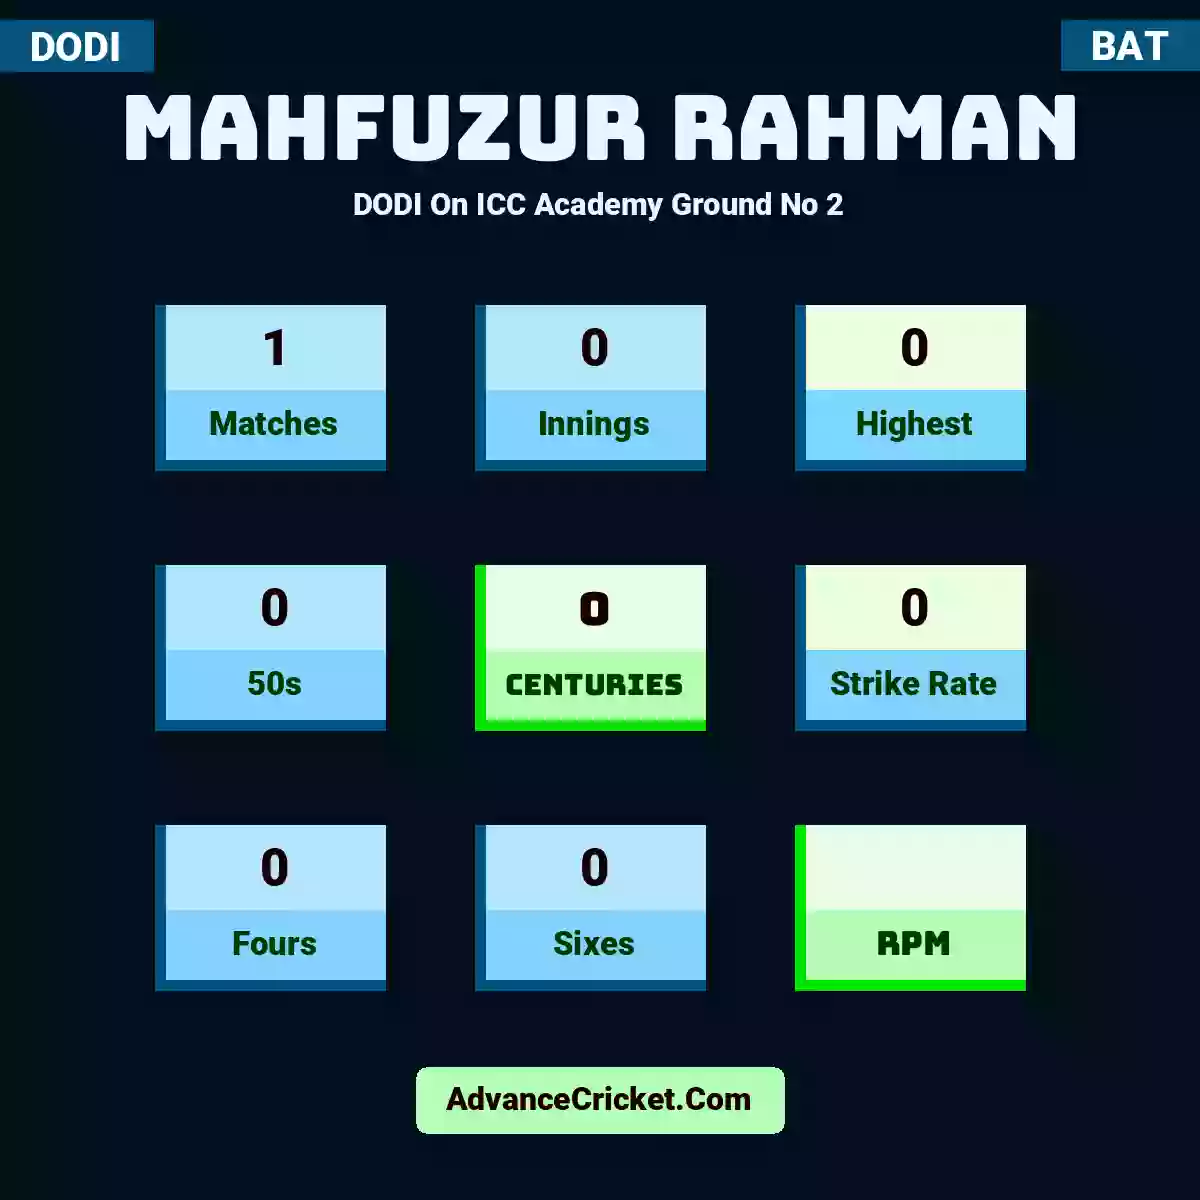 Mahfuzur Rahman DODI  On ICC Academy Ground No 2, Mahfuzur Rahman played 1 matches, scored 0 runs as highest, 0 half-centuries, and 0 centuries, with a strike rate of 0. M.Rahman hit 0 fours and 0 sixes.